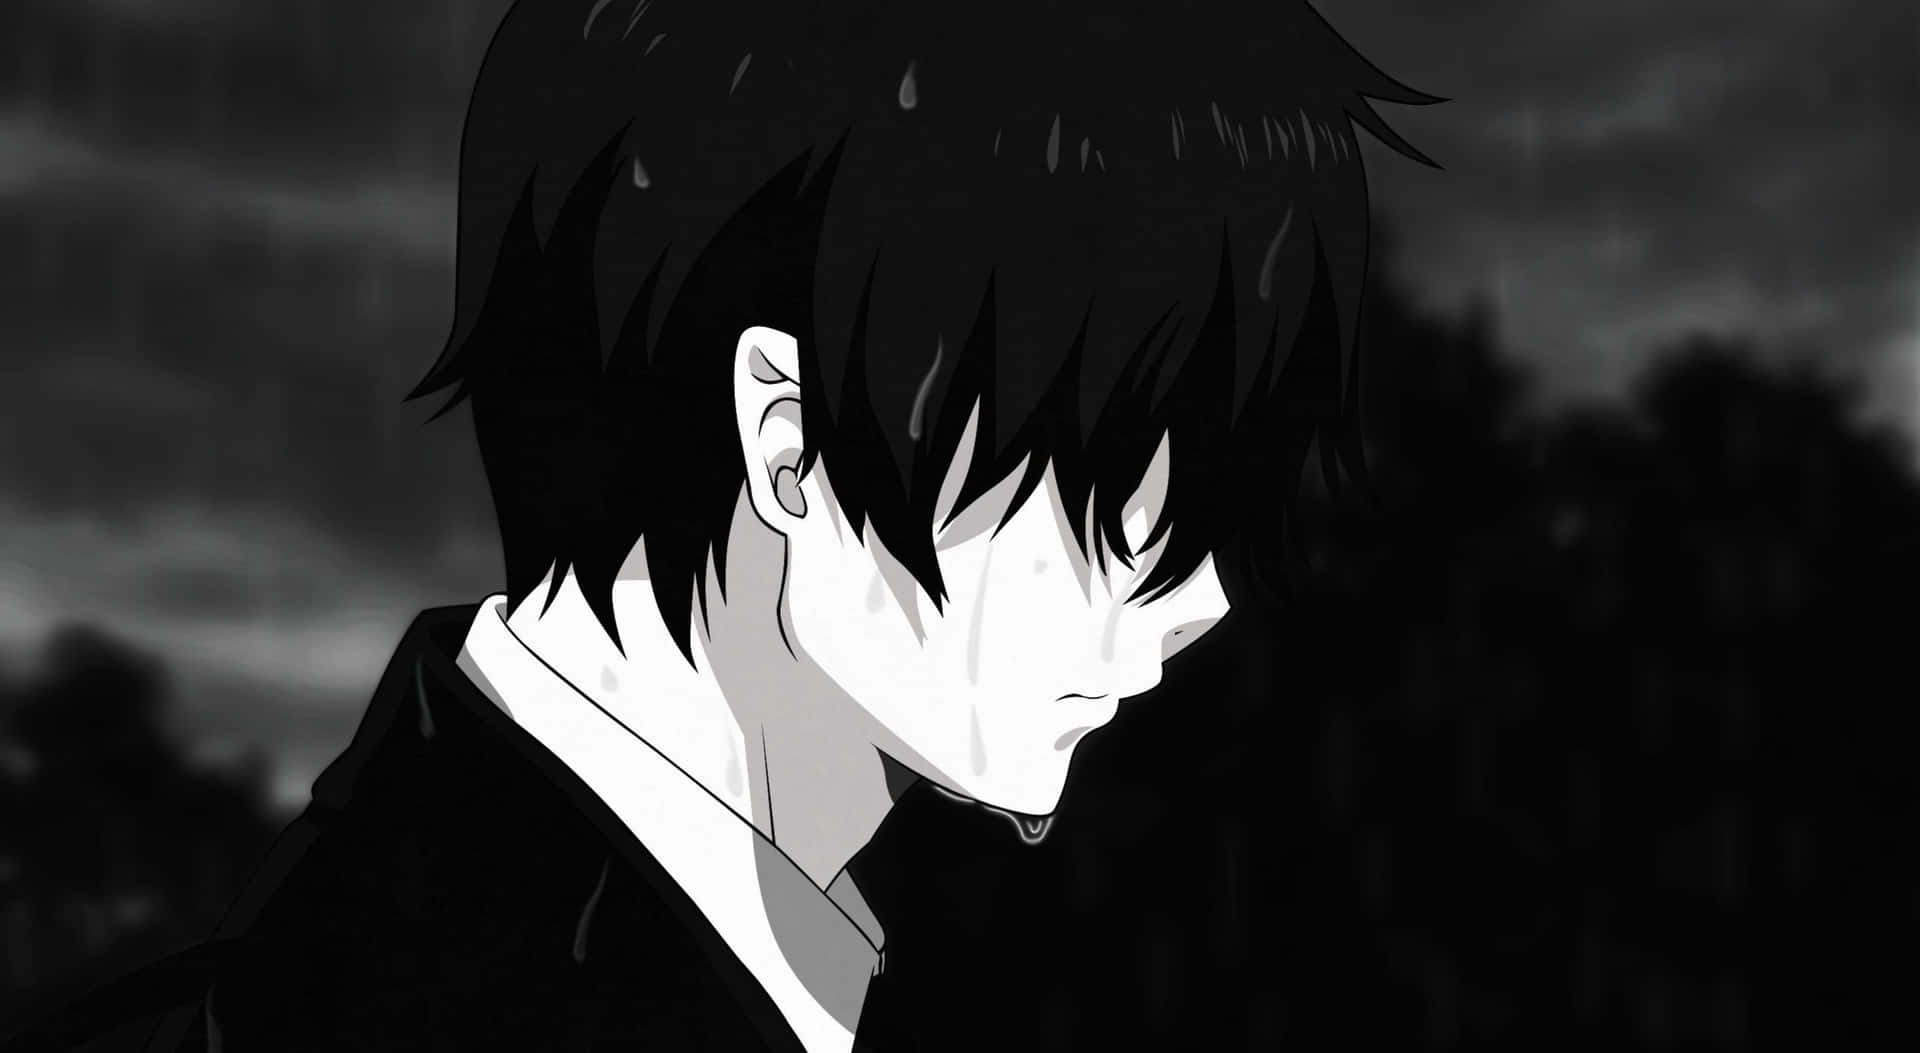 Sad Aesthetic Anime Boy With Tears Wallpaper